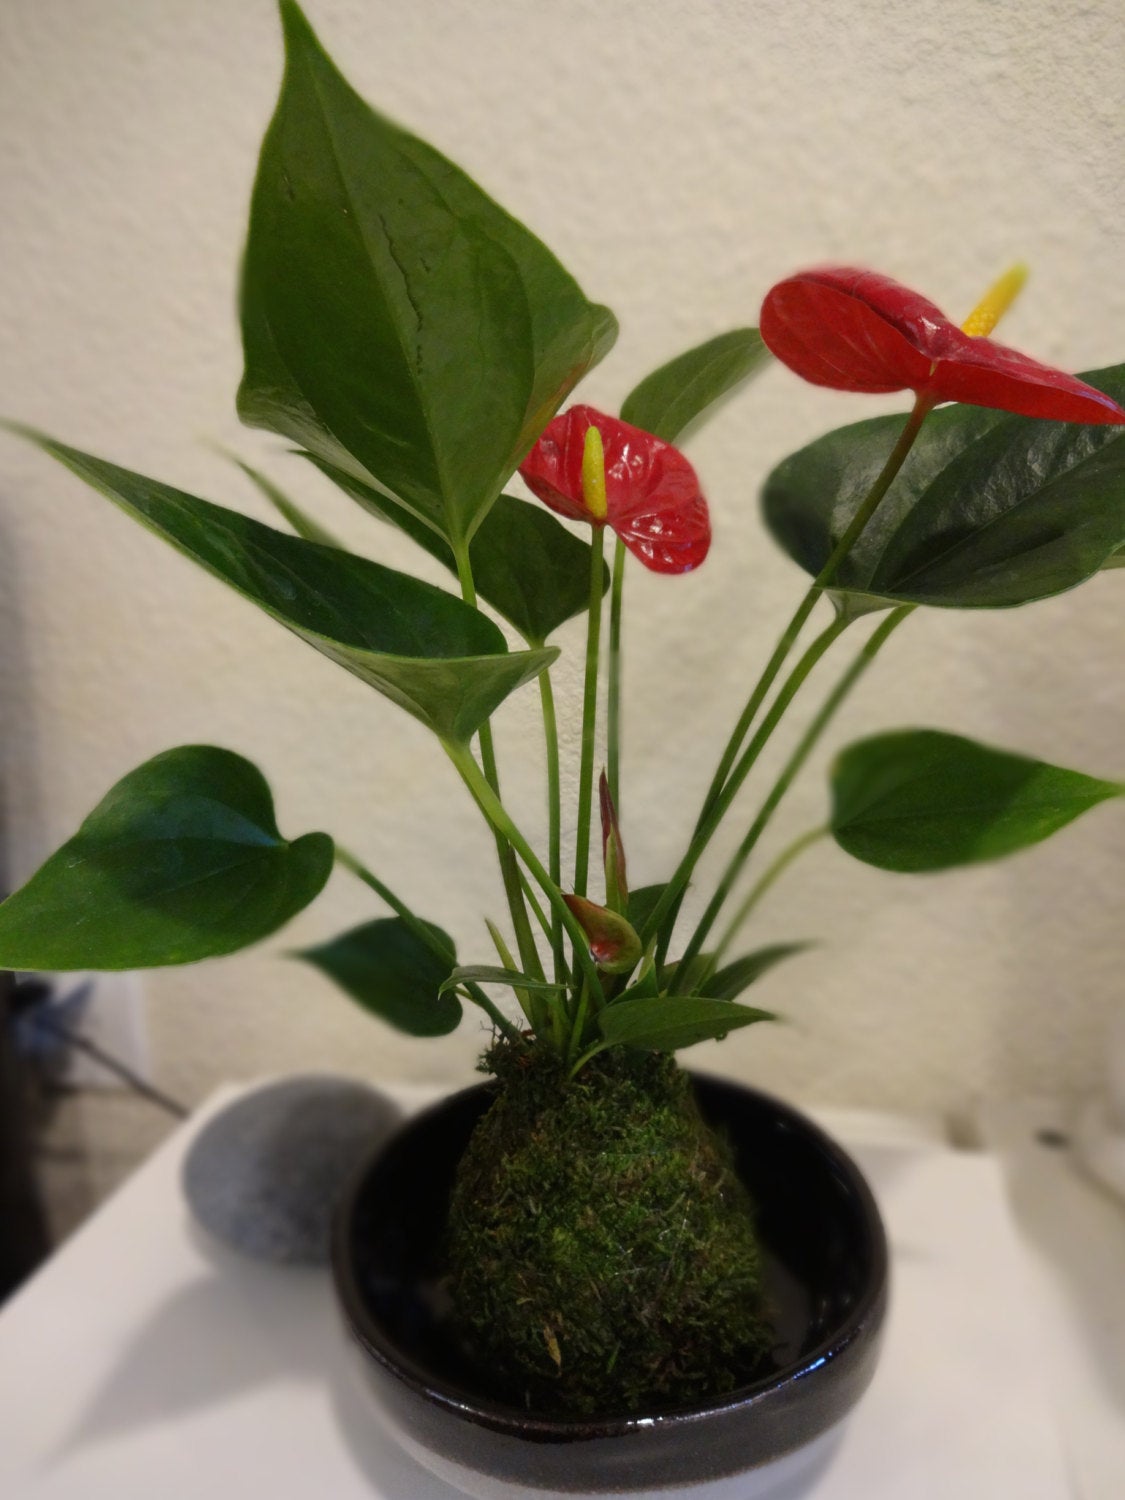 Red Anthrium Kokedama - Bonsai Moss Ball, anthrium, vivid red color